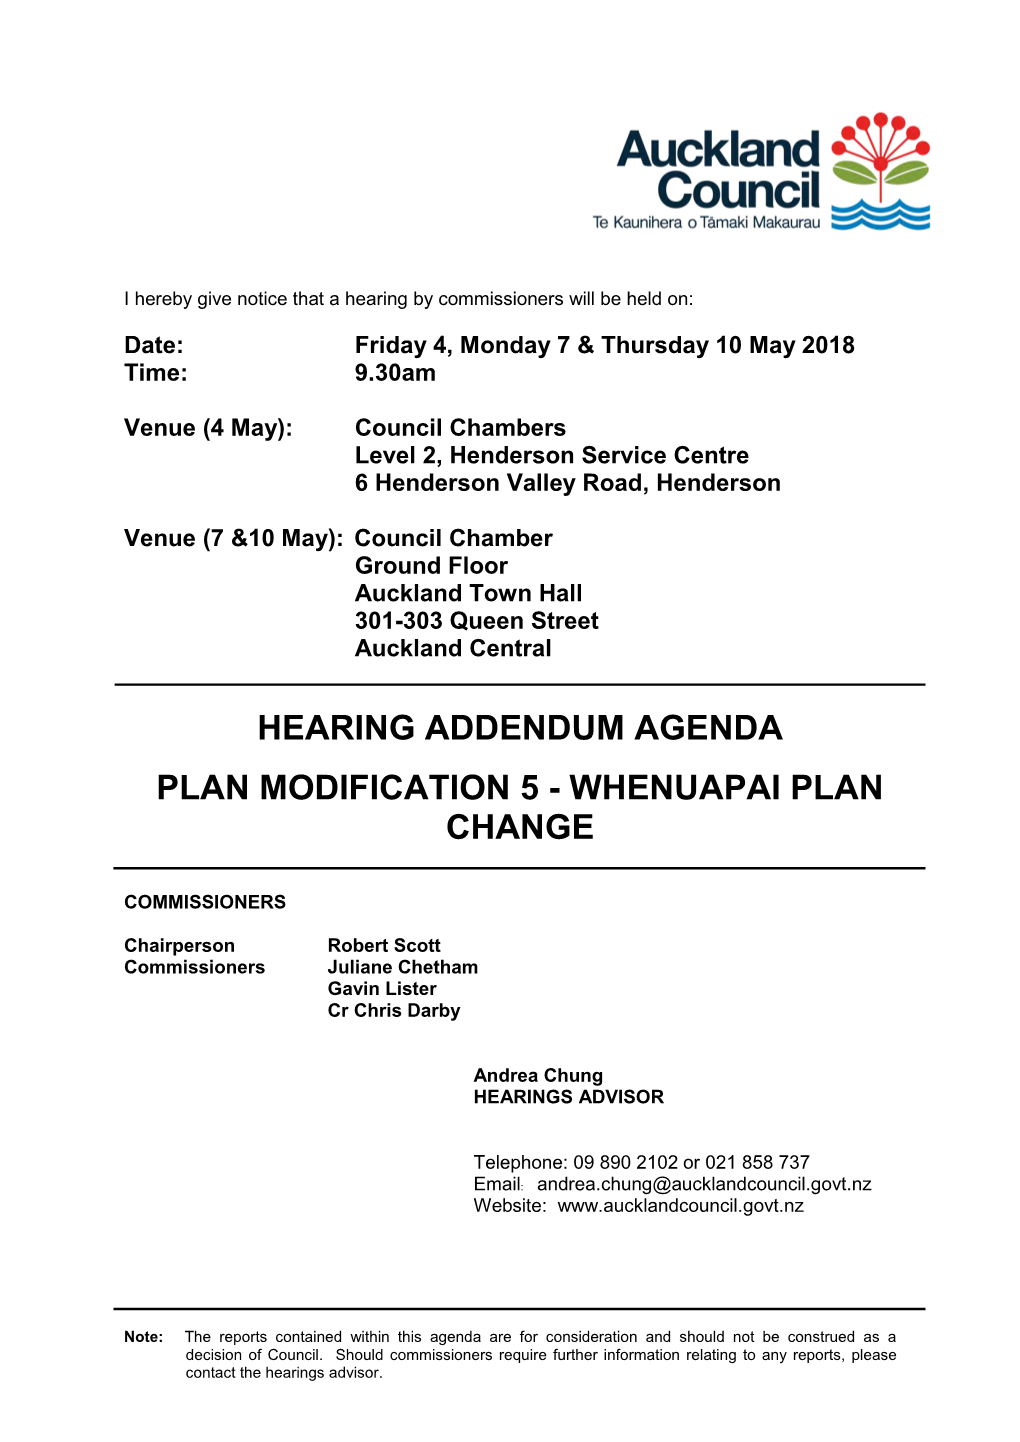 Hearing Addendum Agenda Plan Modification 5 - Whenuapai Plan Change